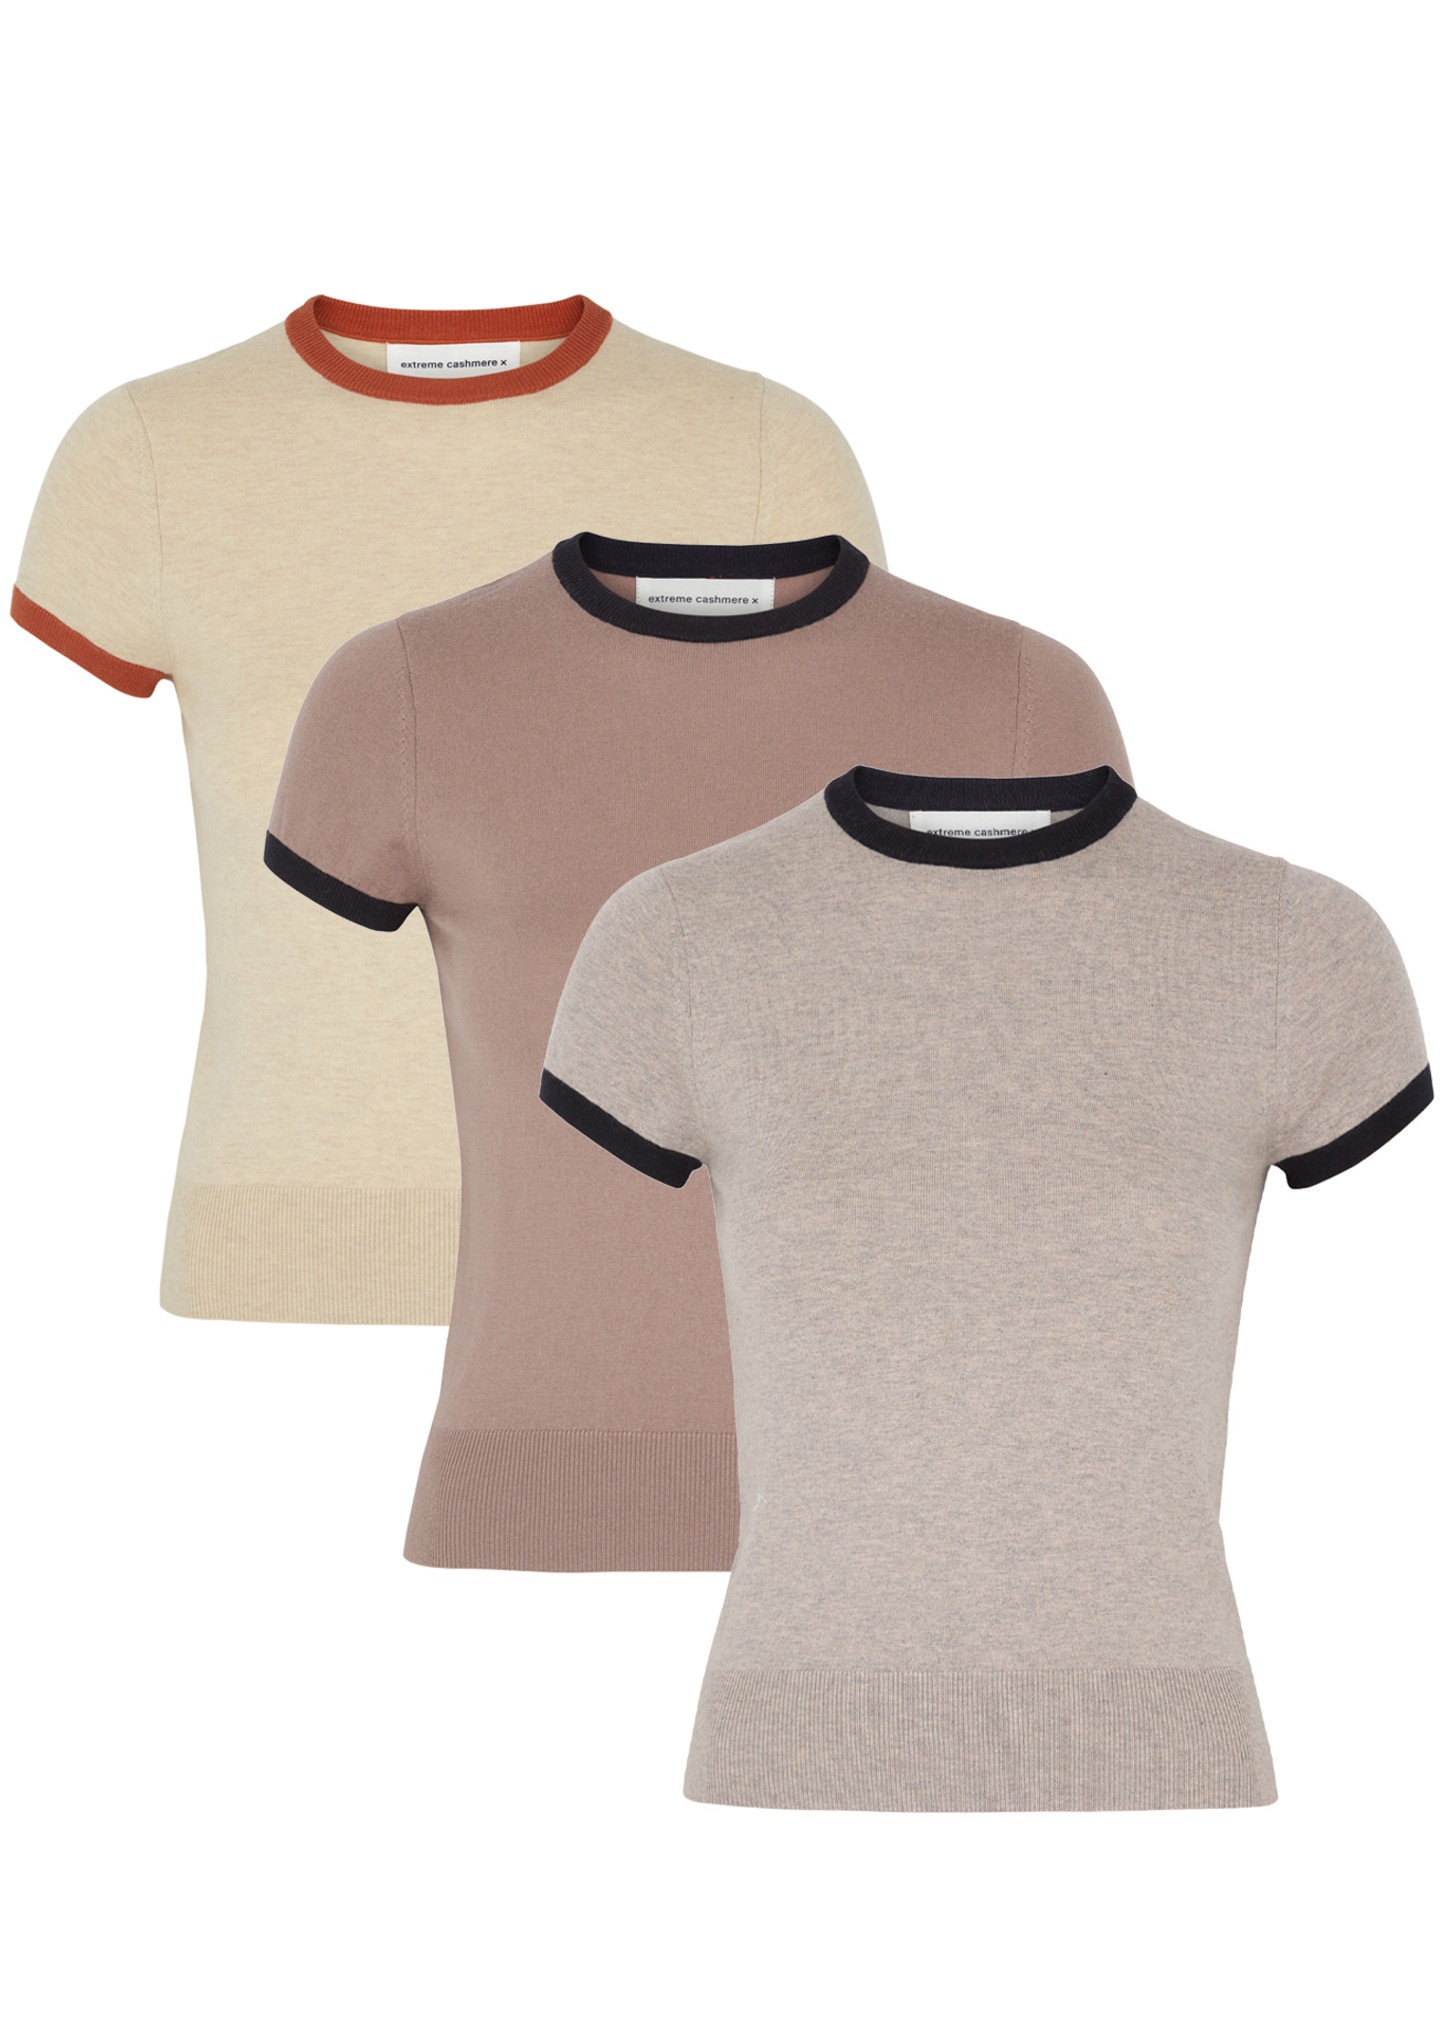 N°339 Chloe cotton-blend T-shirts - set of three - 1